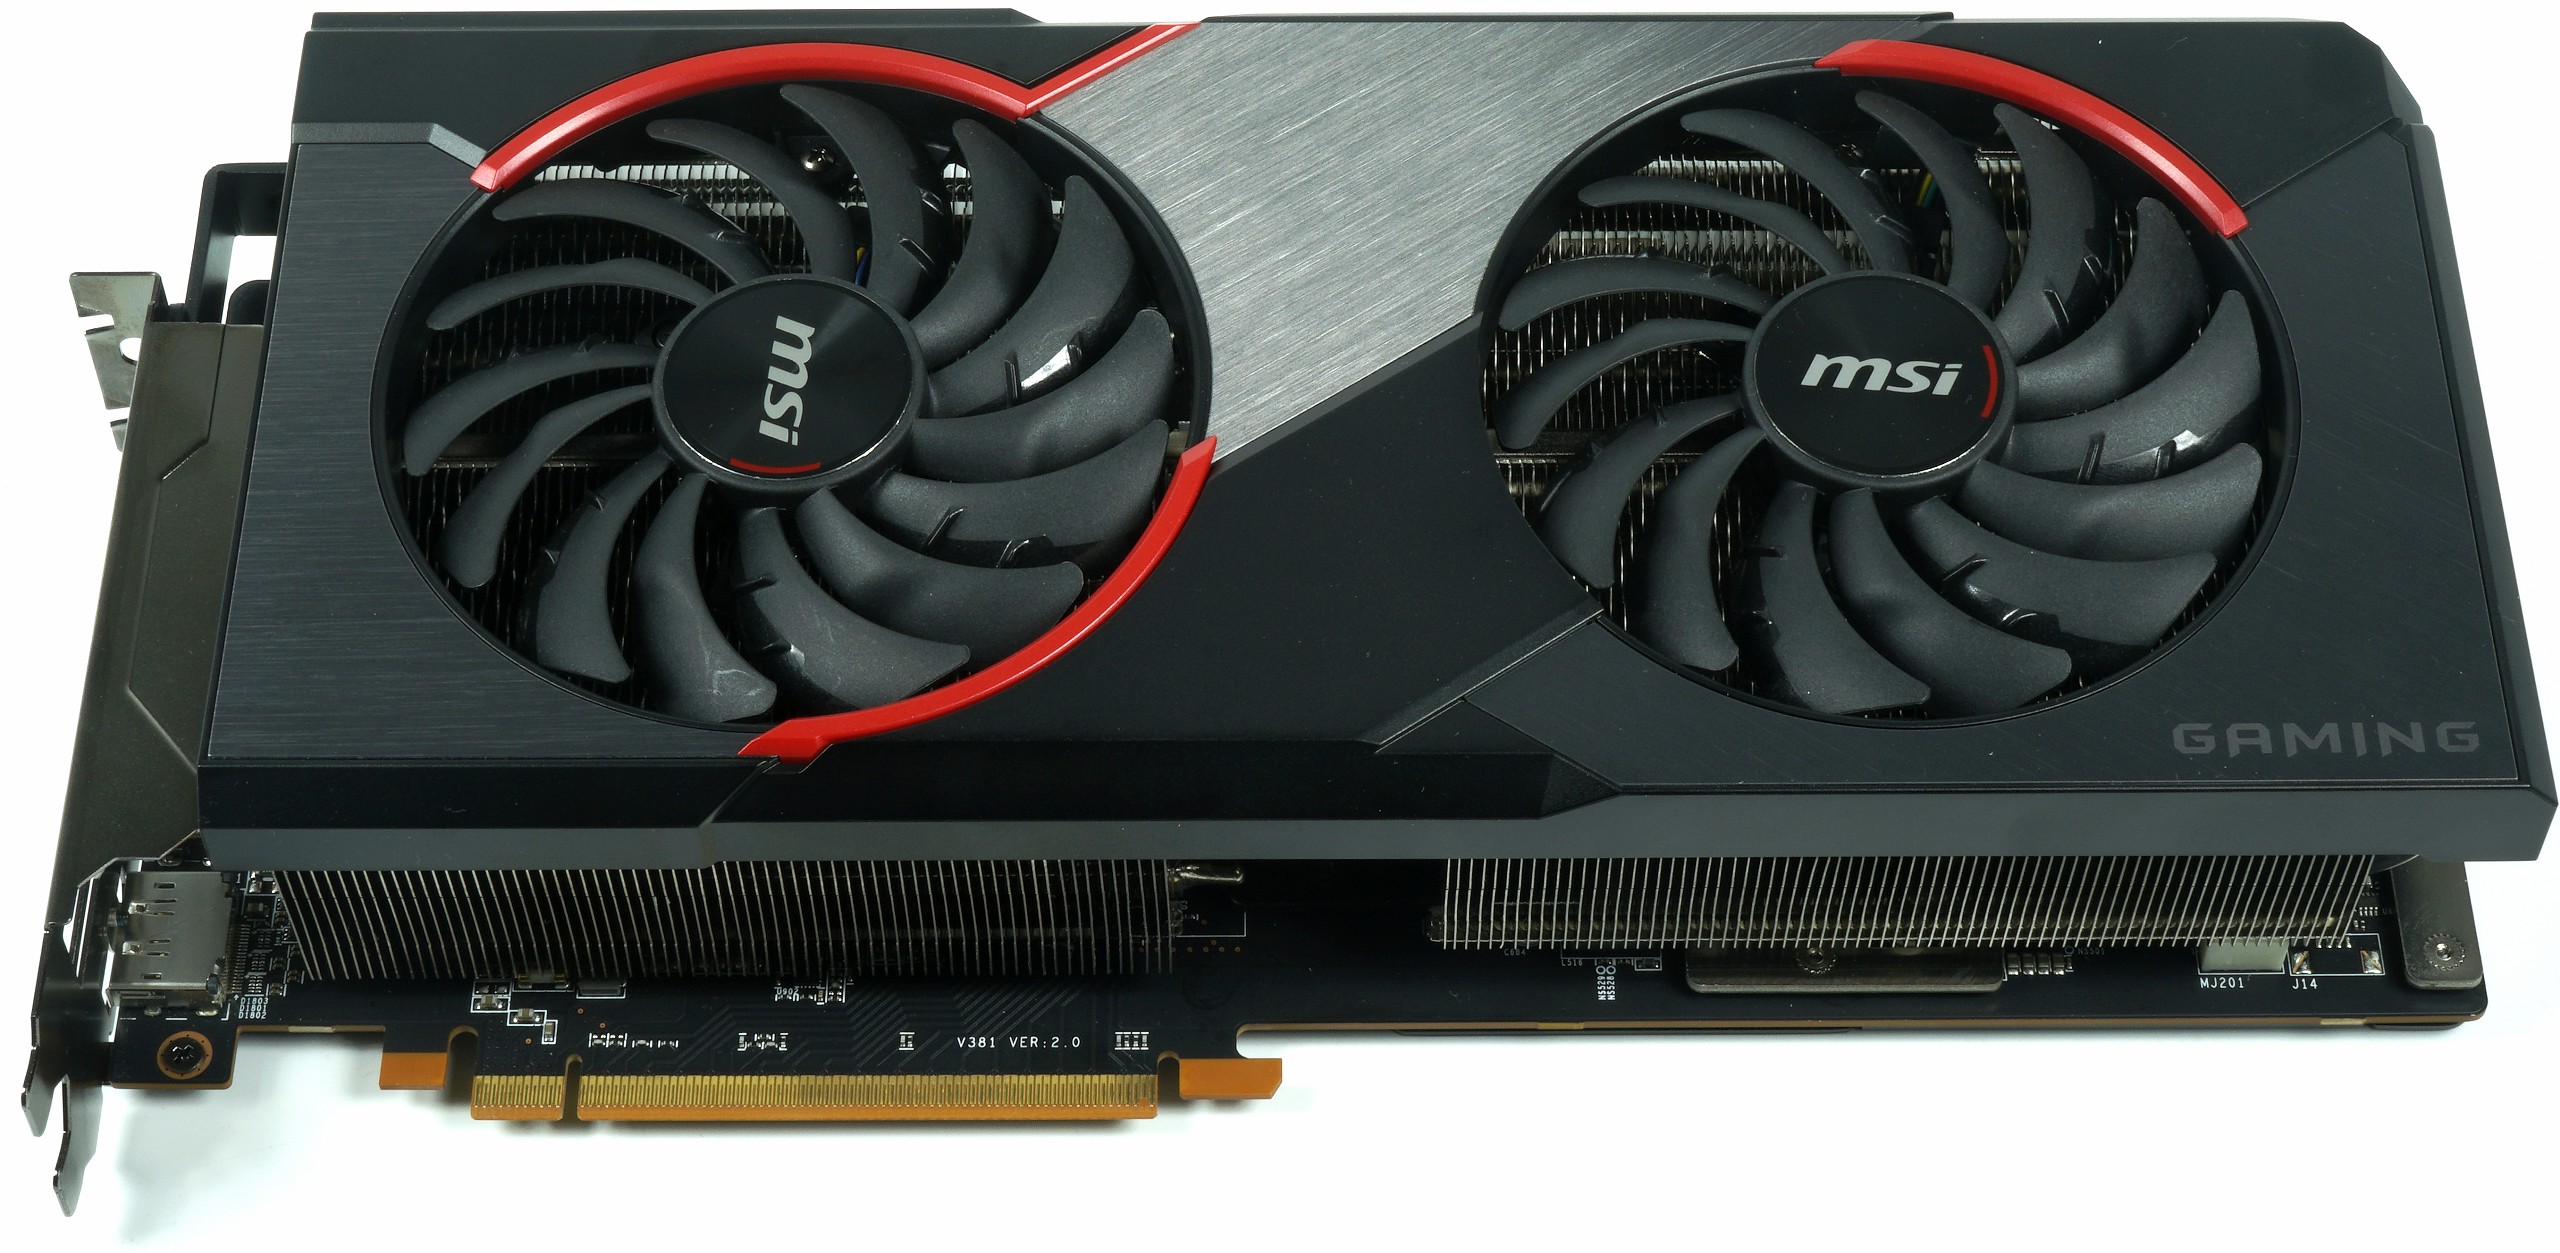 MSI Radeon RX 5700 XT Gaming X Reviews, Pros and Cons